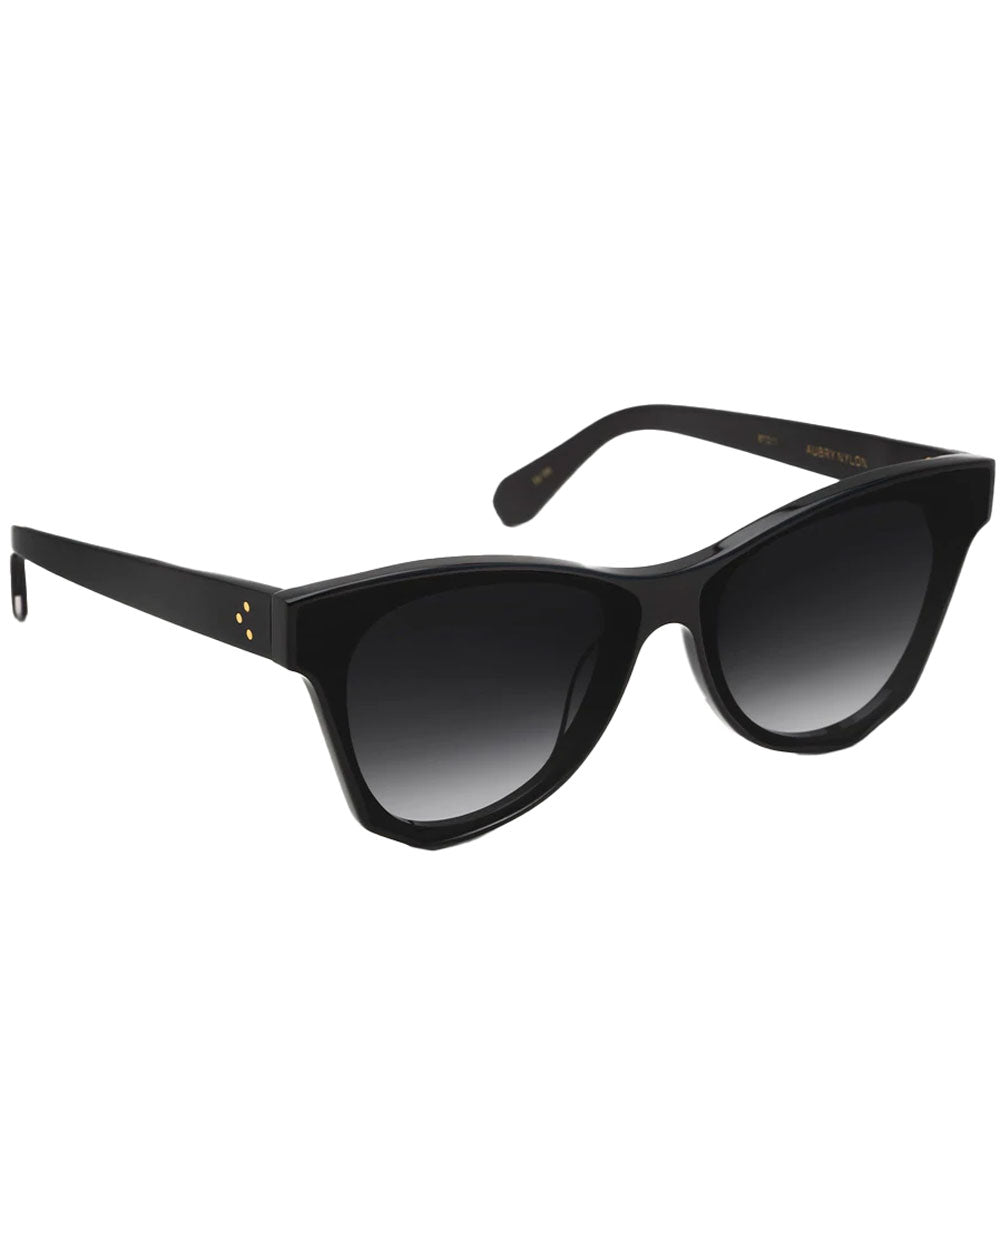 Aubry Nylon Sunglasses in Black and Shadow